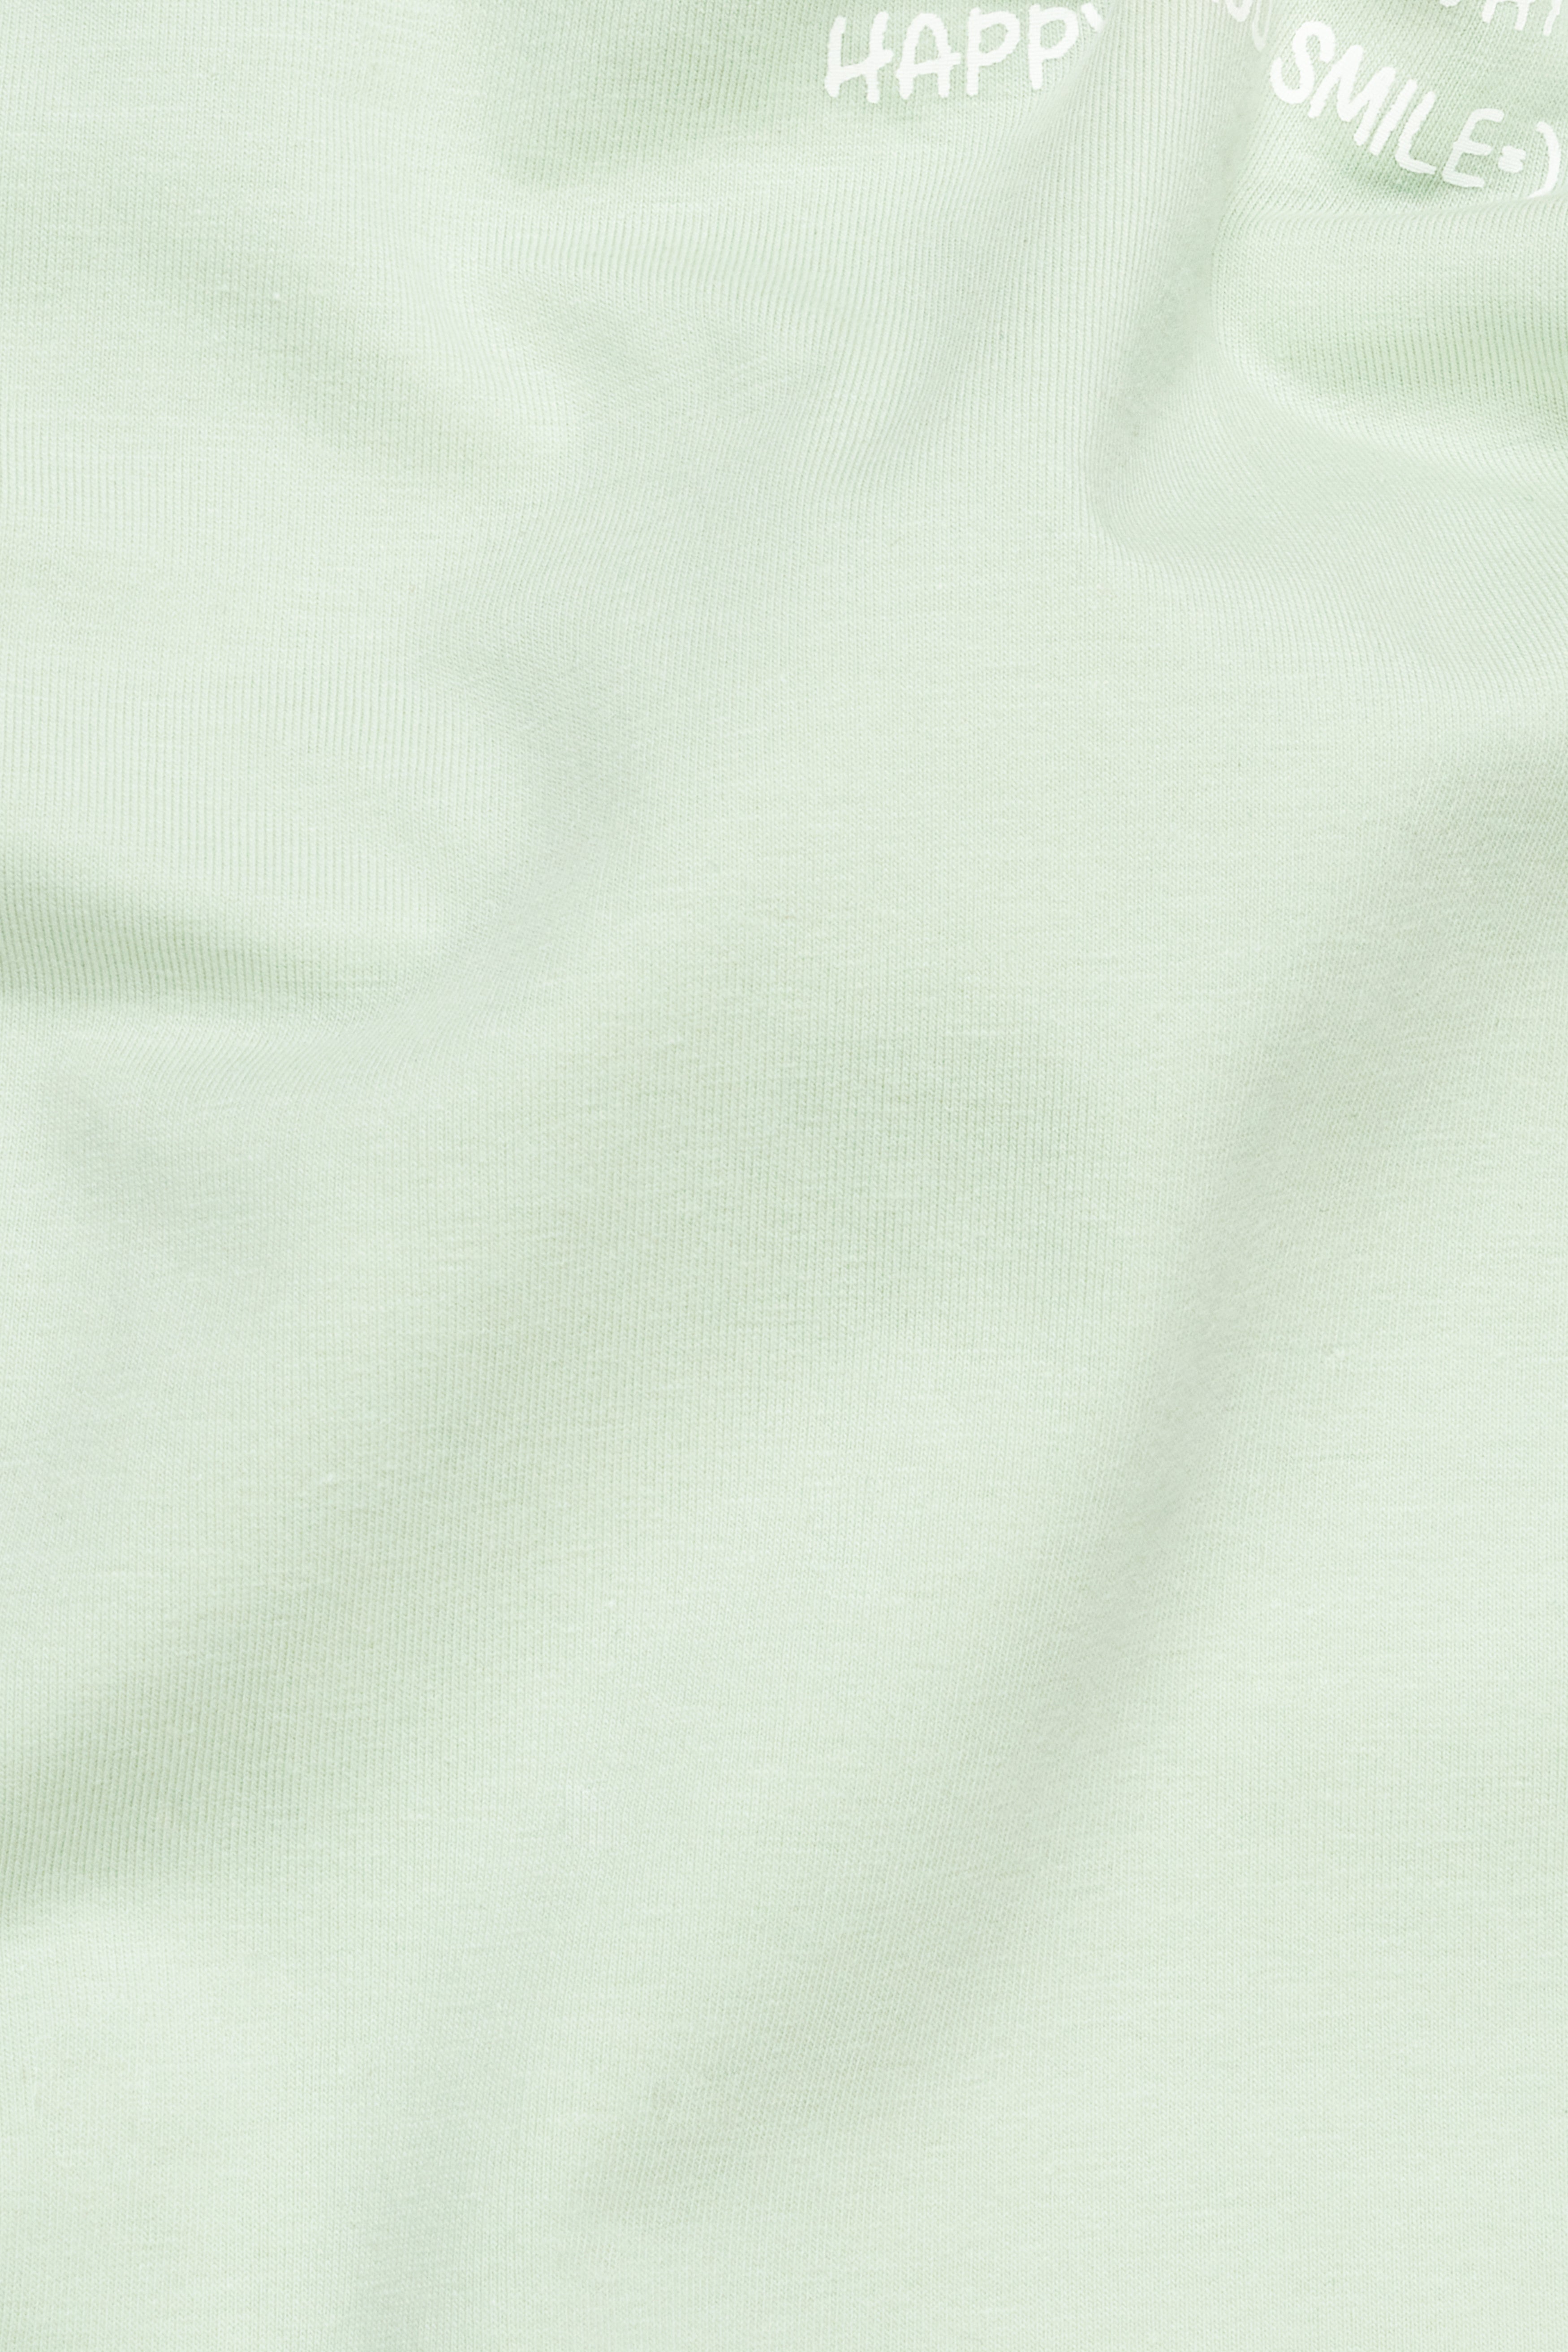 Surf Crest Green Printed Premium Cotton Oversized T-shirt TS954-S, TS954-M, TS954-L, TS954-XL, TS954-XXL